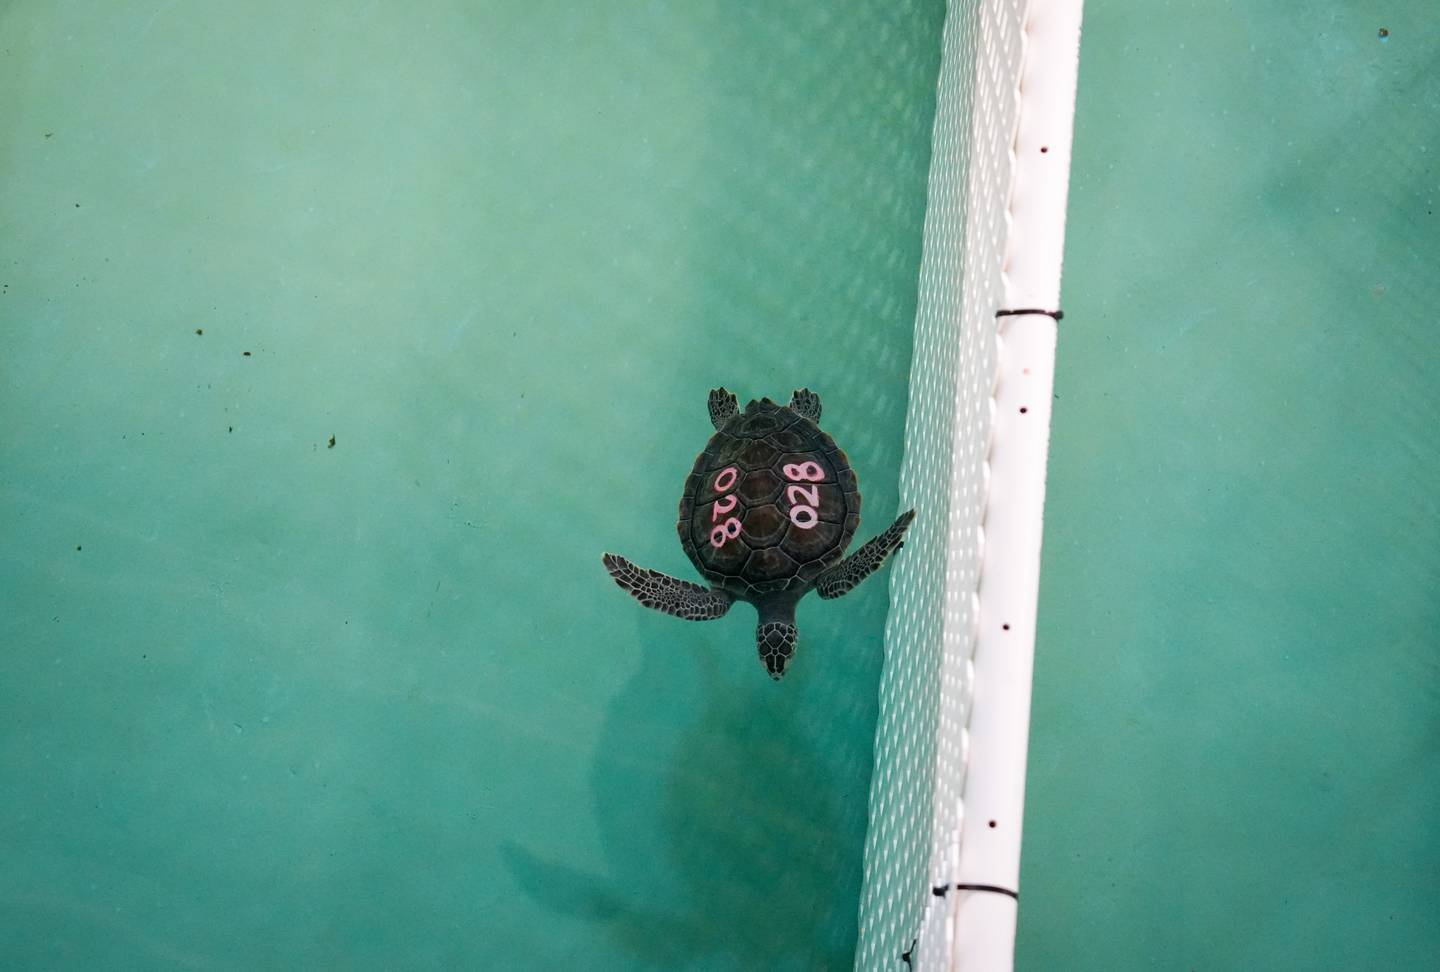 A kemp's ridley sea turtle undergoing rehabilitation at the National Aquarium.